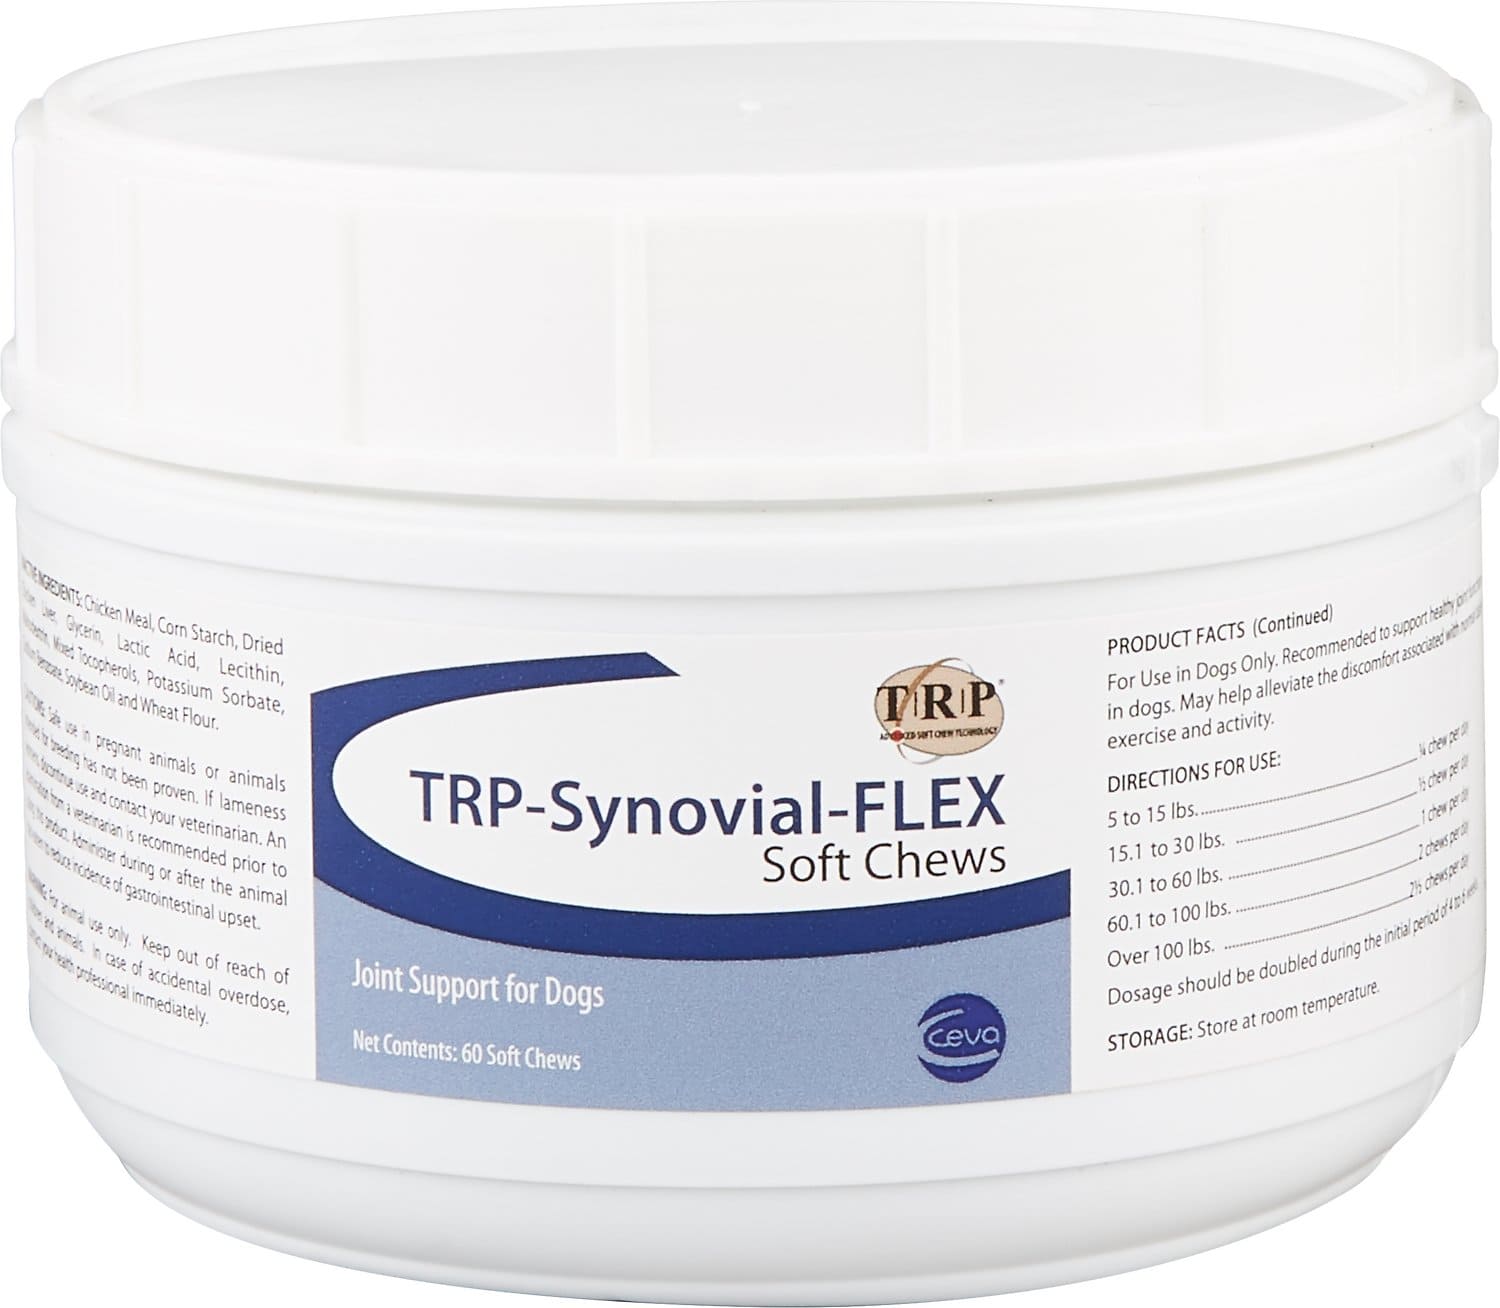 TRP-Synovial-Flex 60 soft chews 1